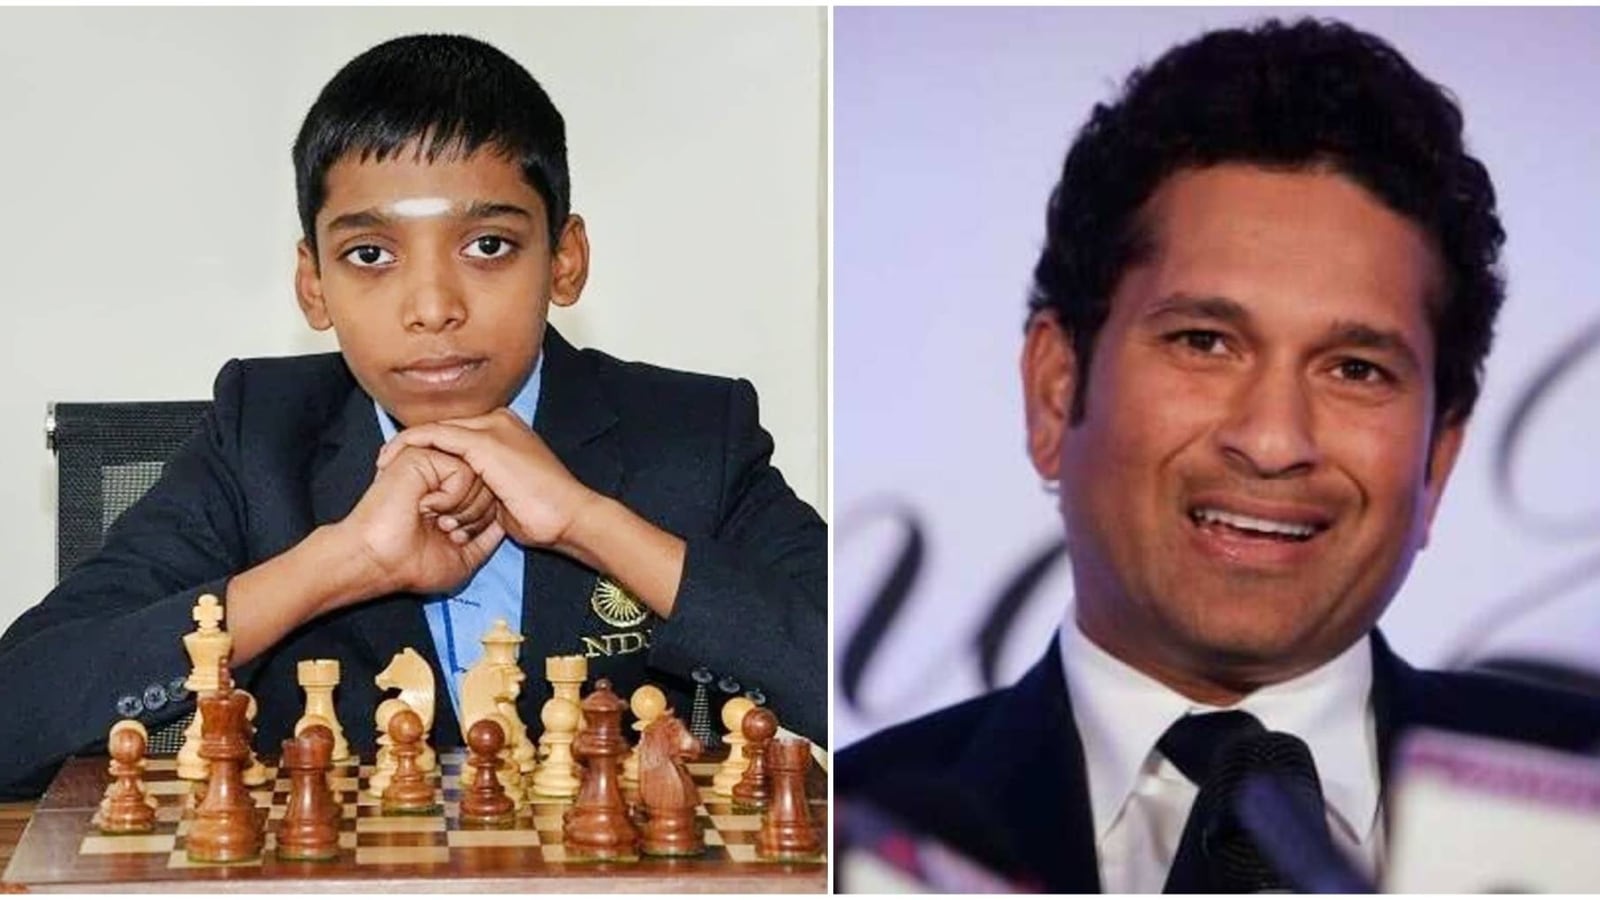 Sachin Tendulkar congratulates R Praggnanandhaa on defeating Magnus  Carlsen; - Hindustan Times